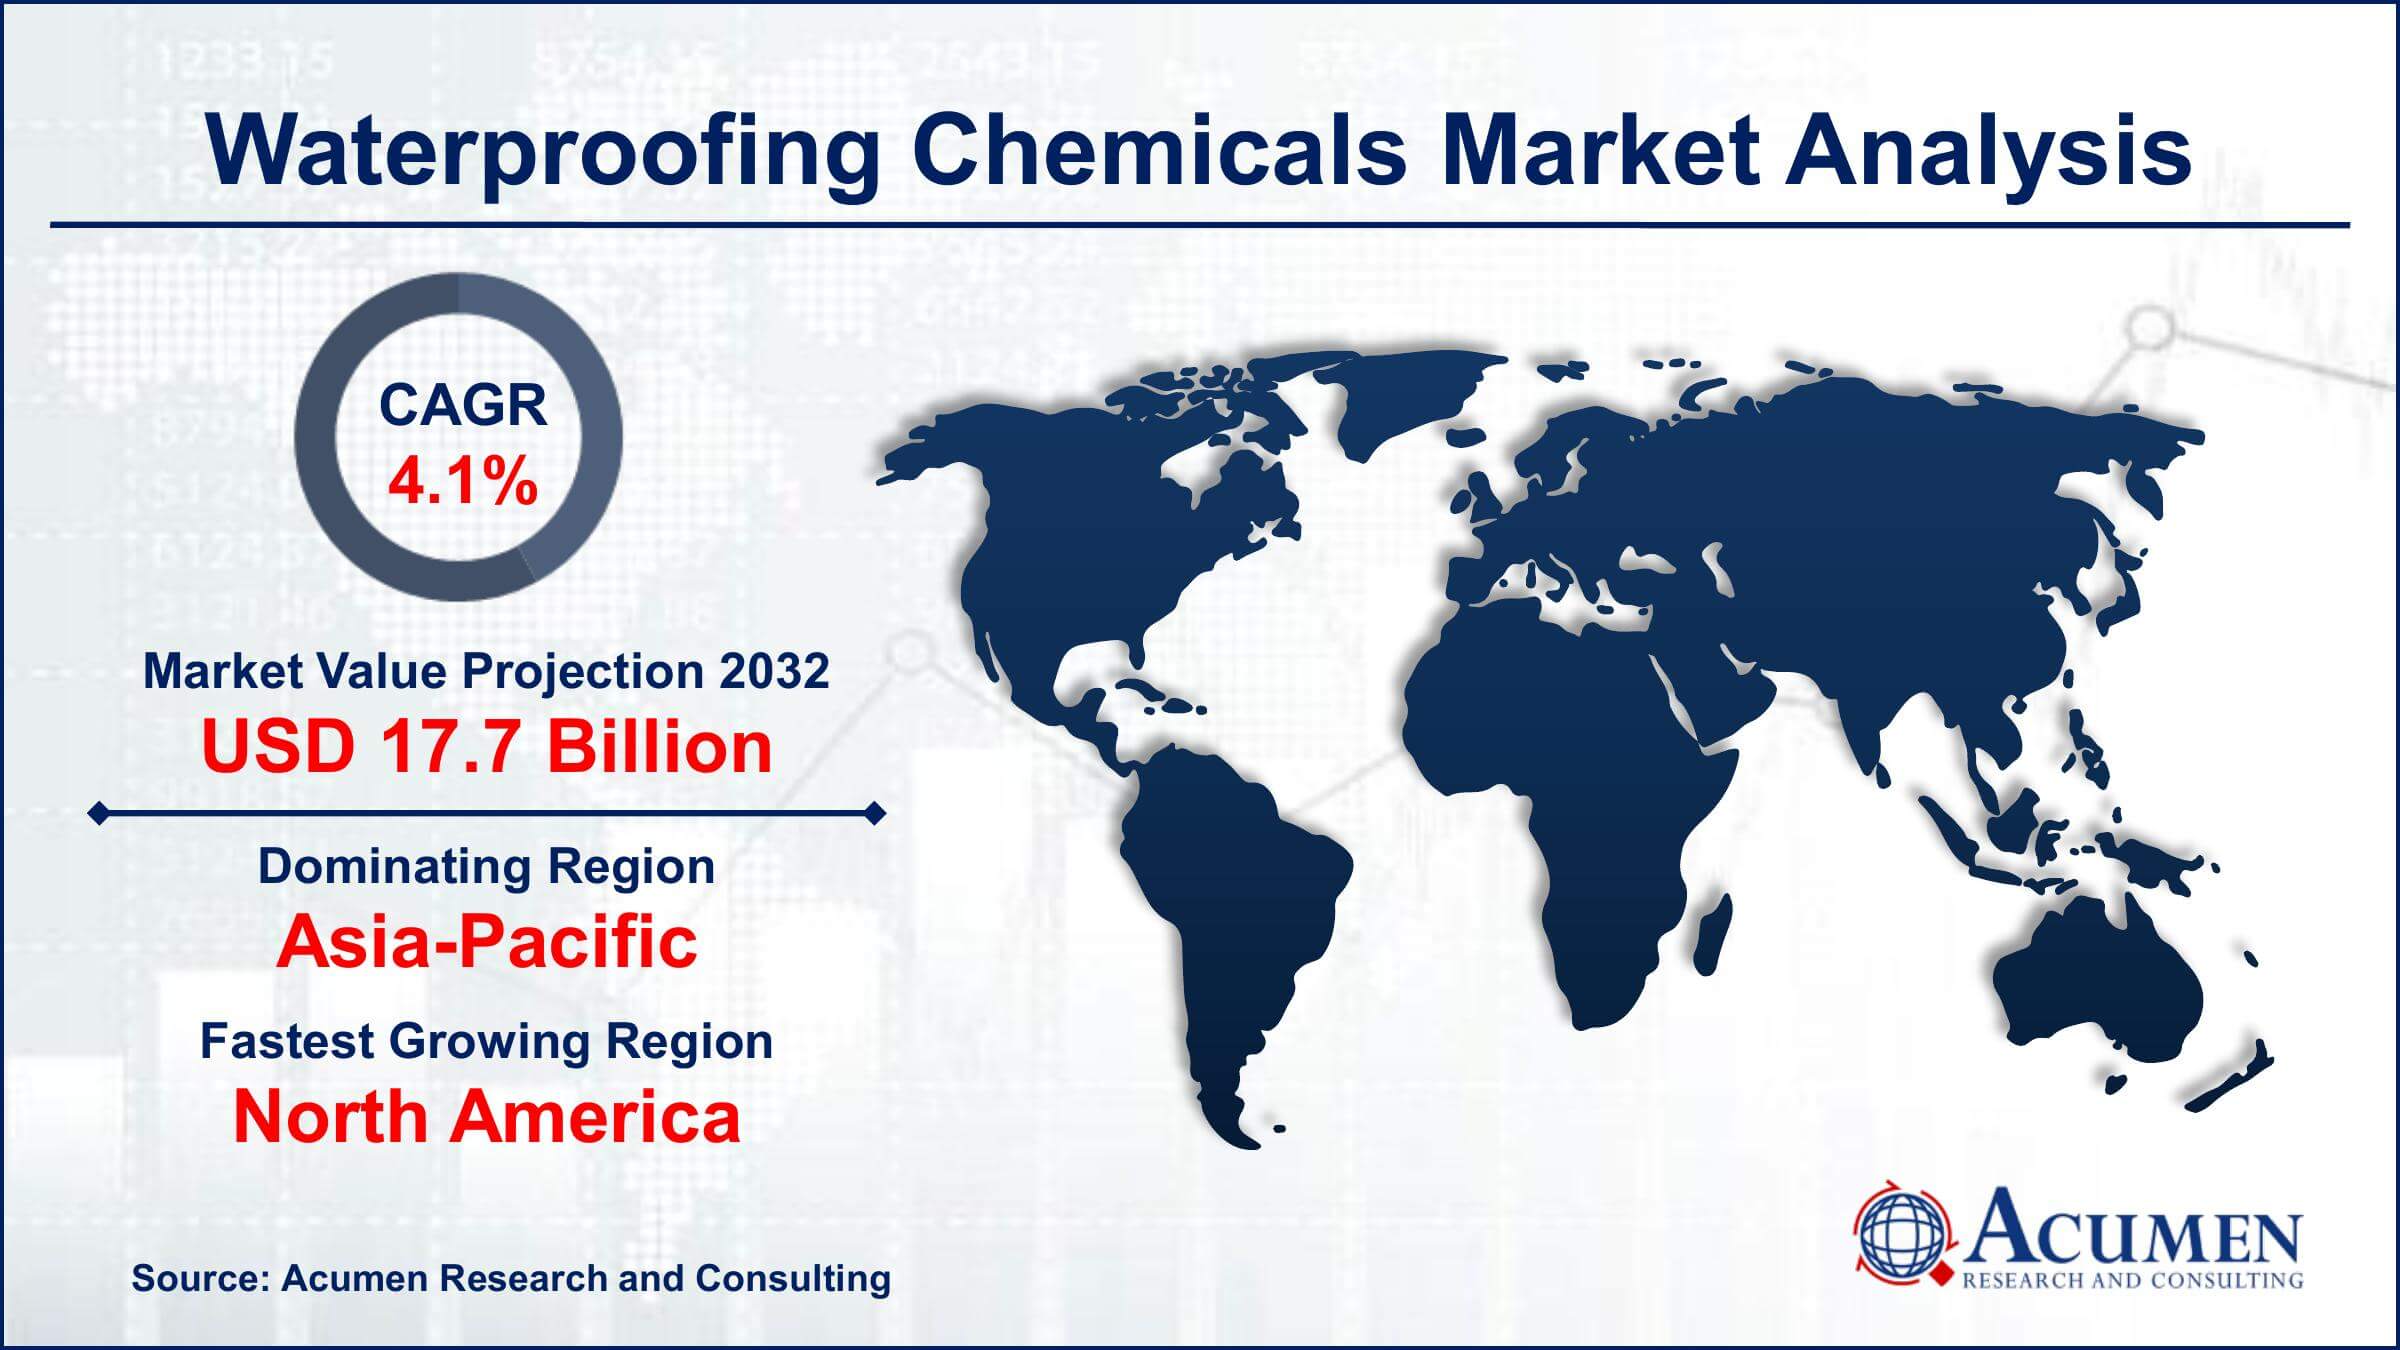 Global Waterproofing Chemicals Market Trends